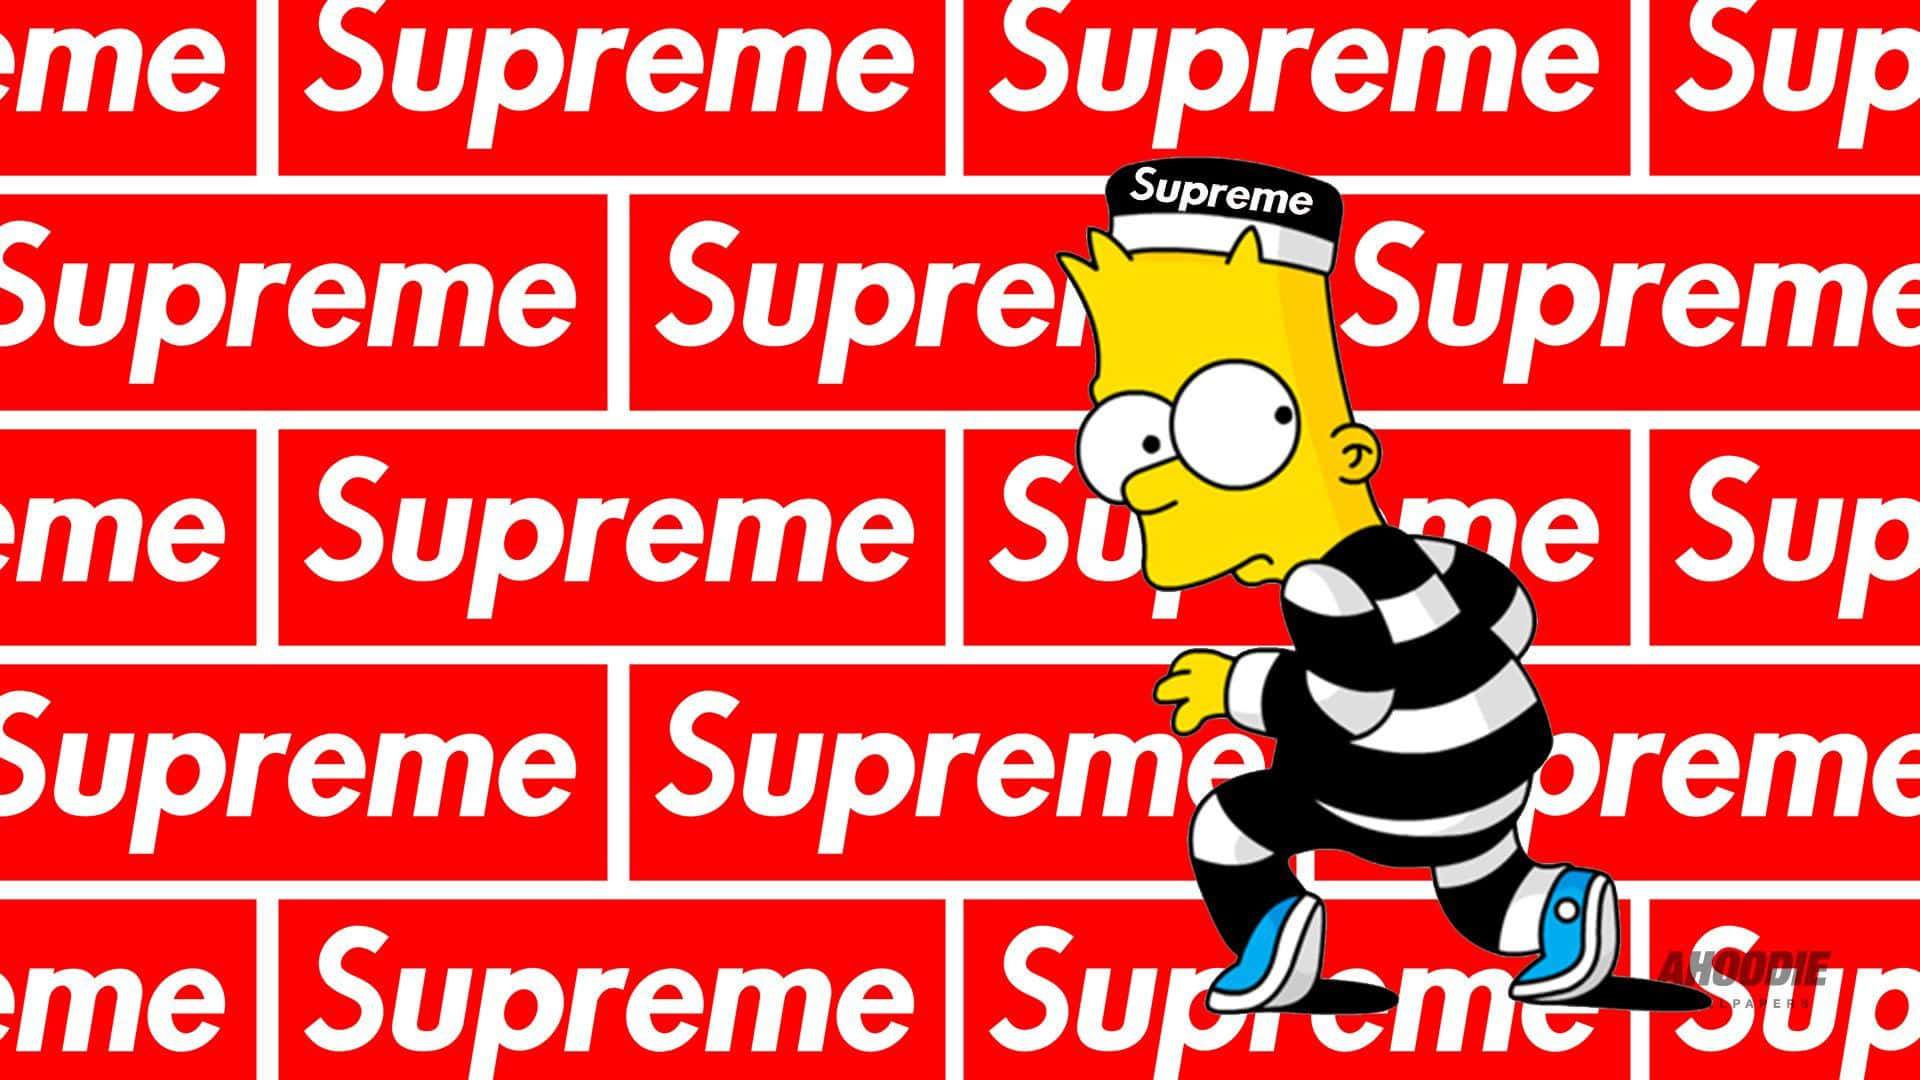 Free Supreme Bart Simpson Wallpaper Downloads, [100+] Supreme Bart Simpson  Wallpapers for FREE | Wallpapers.com